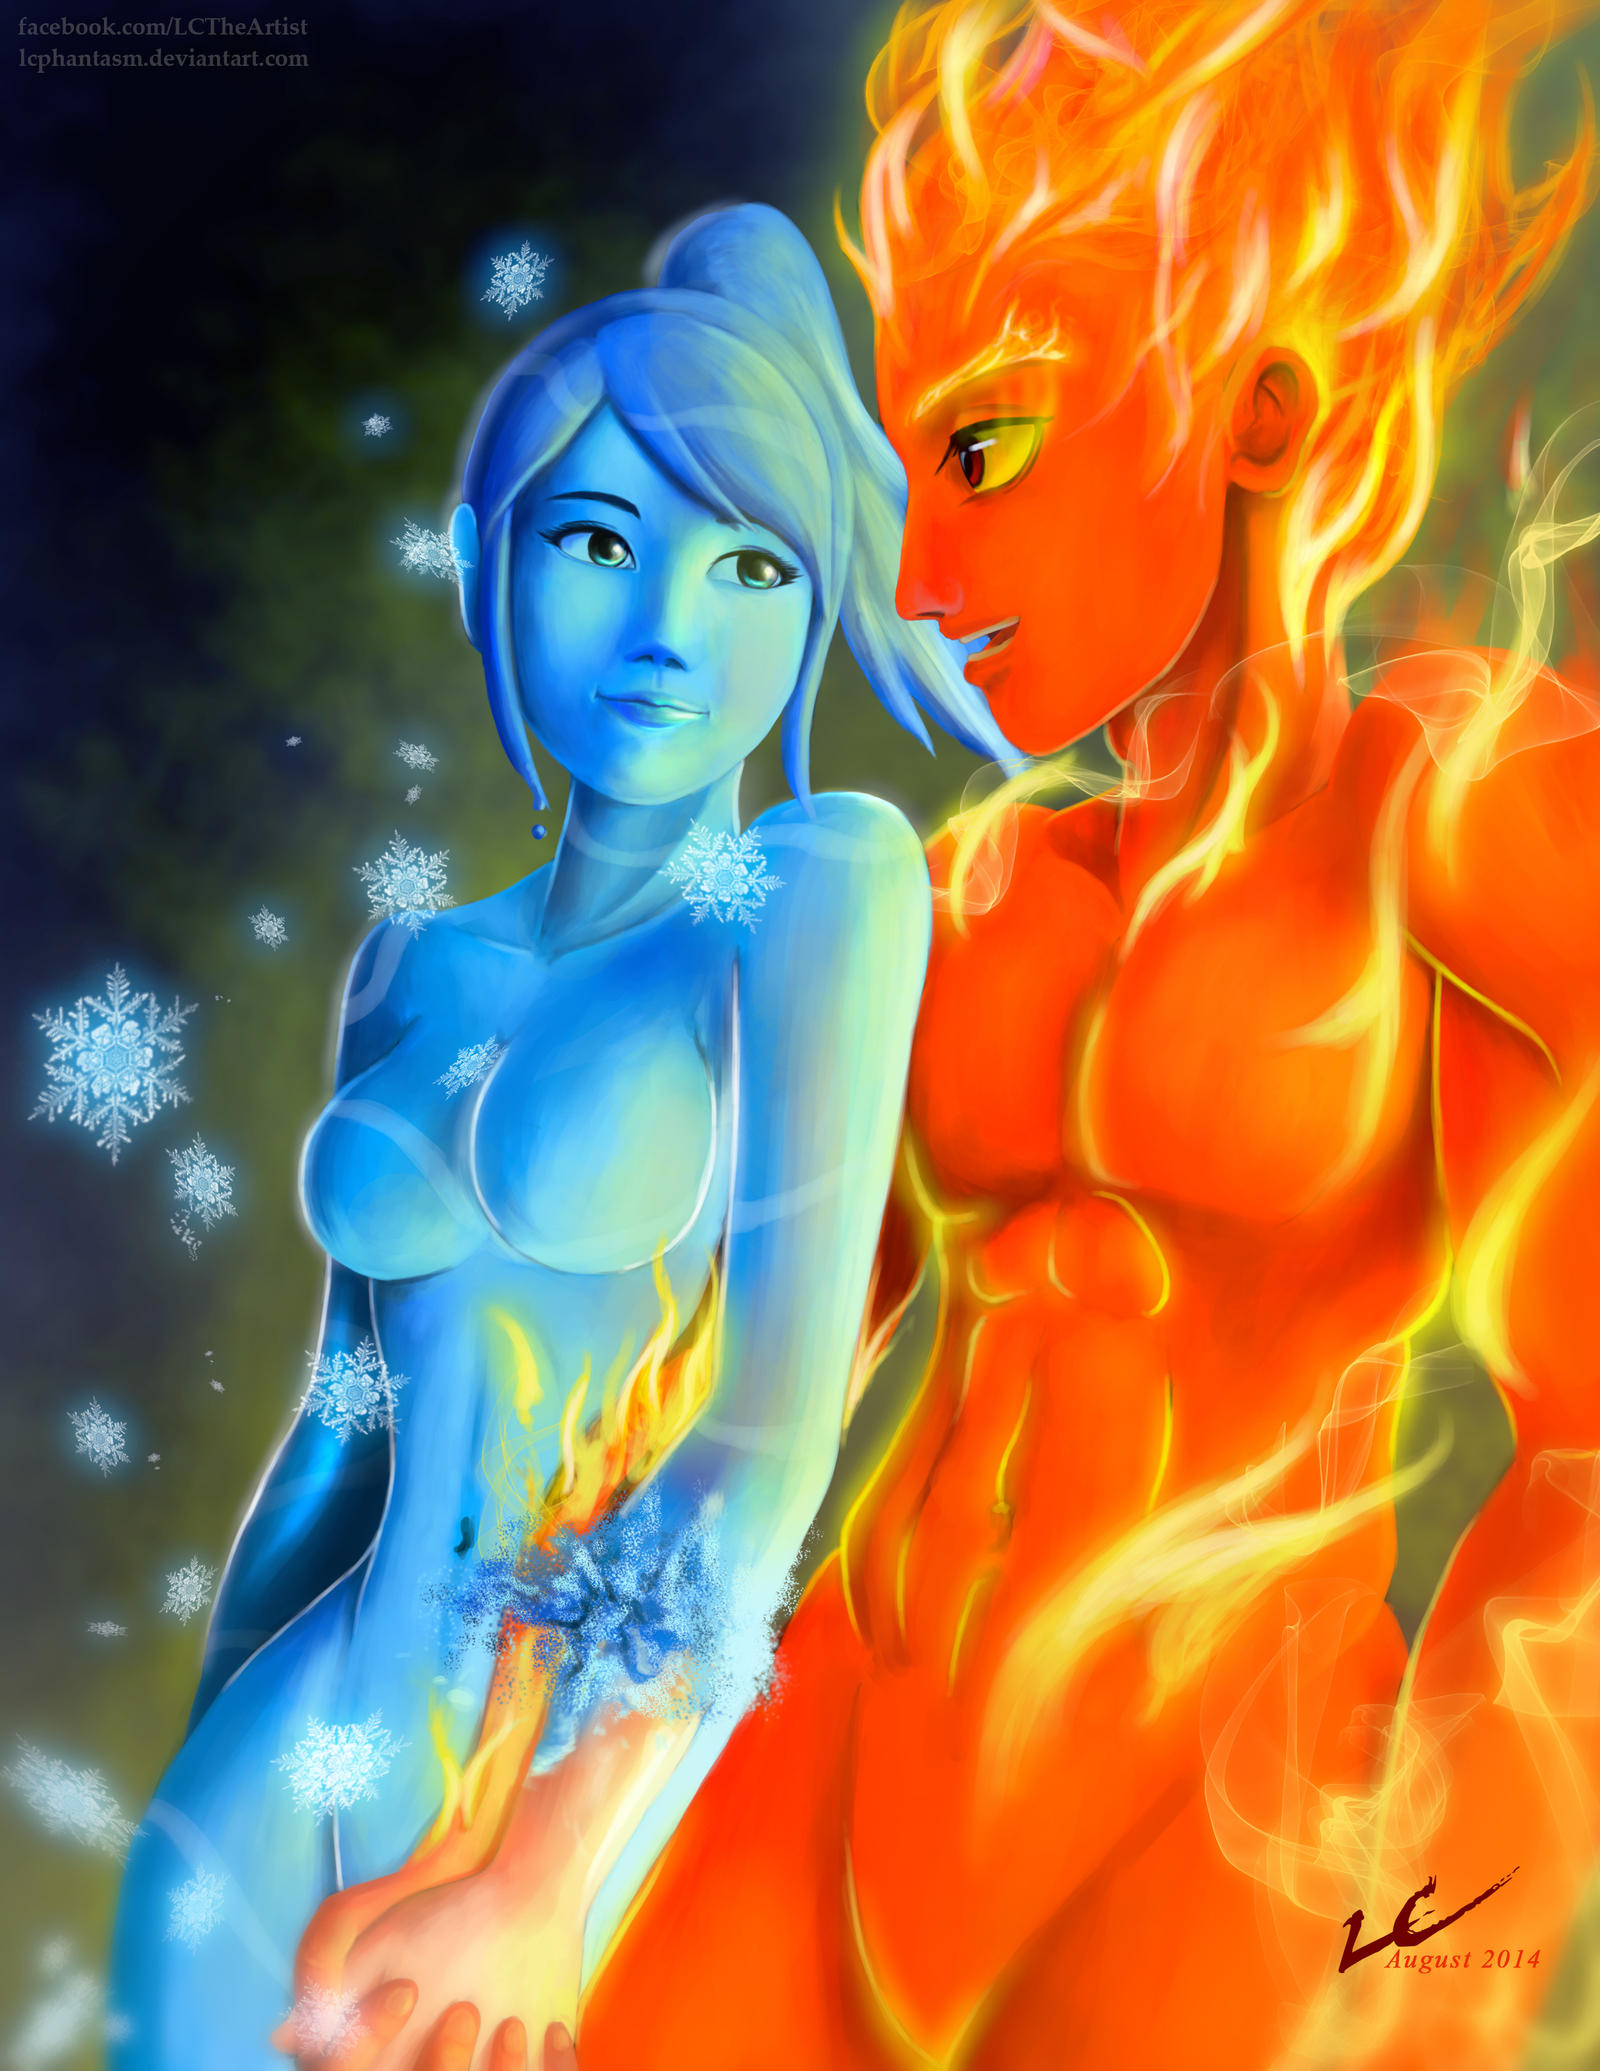 Fireboy and Watergirl by zzAuguss on DeviantArt